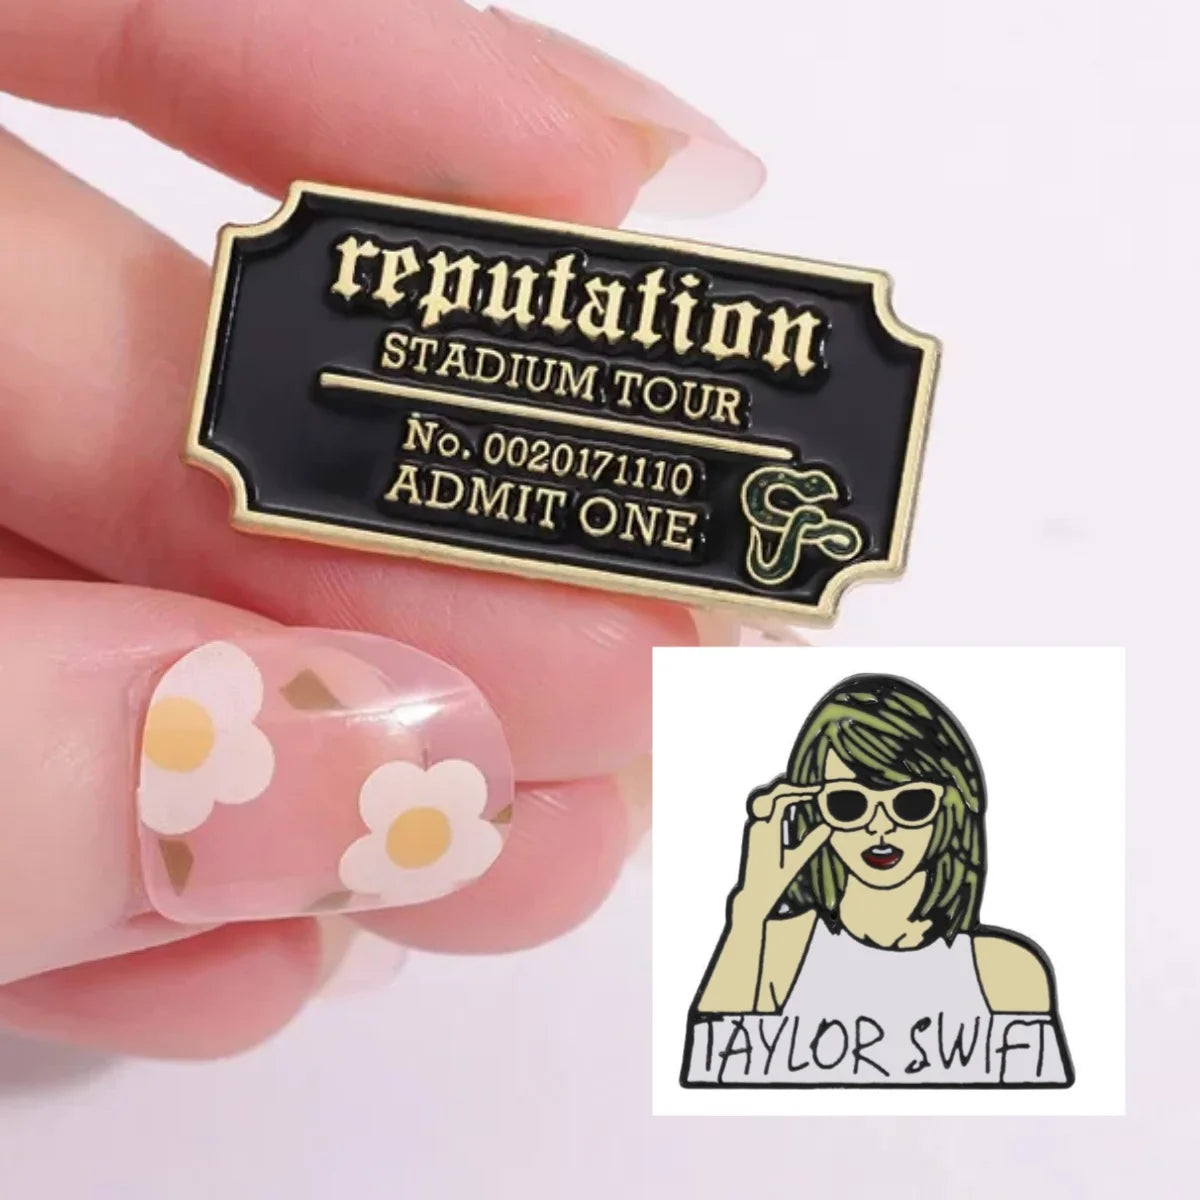 Taylor Swift Eras Letter Enamel Brooch Music Festival Vocal Concert Reputation Tickets Souvenir Badge Ornament Personality Pin